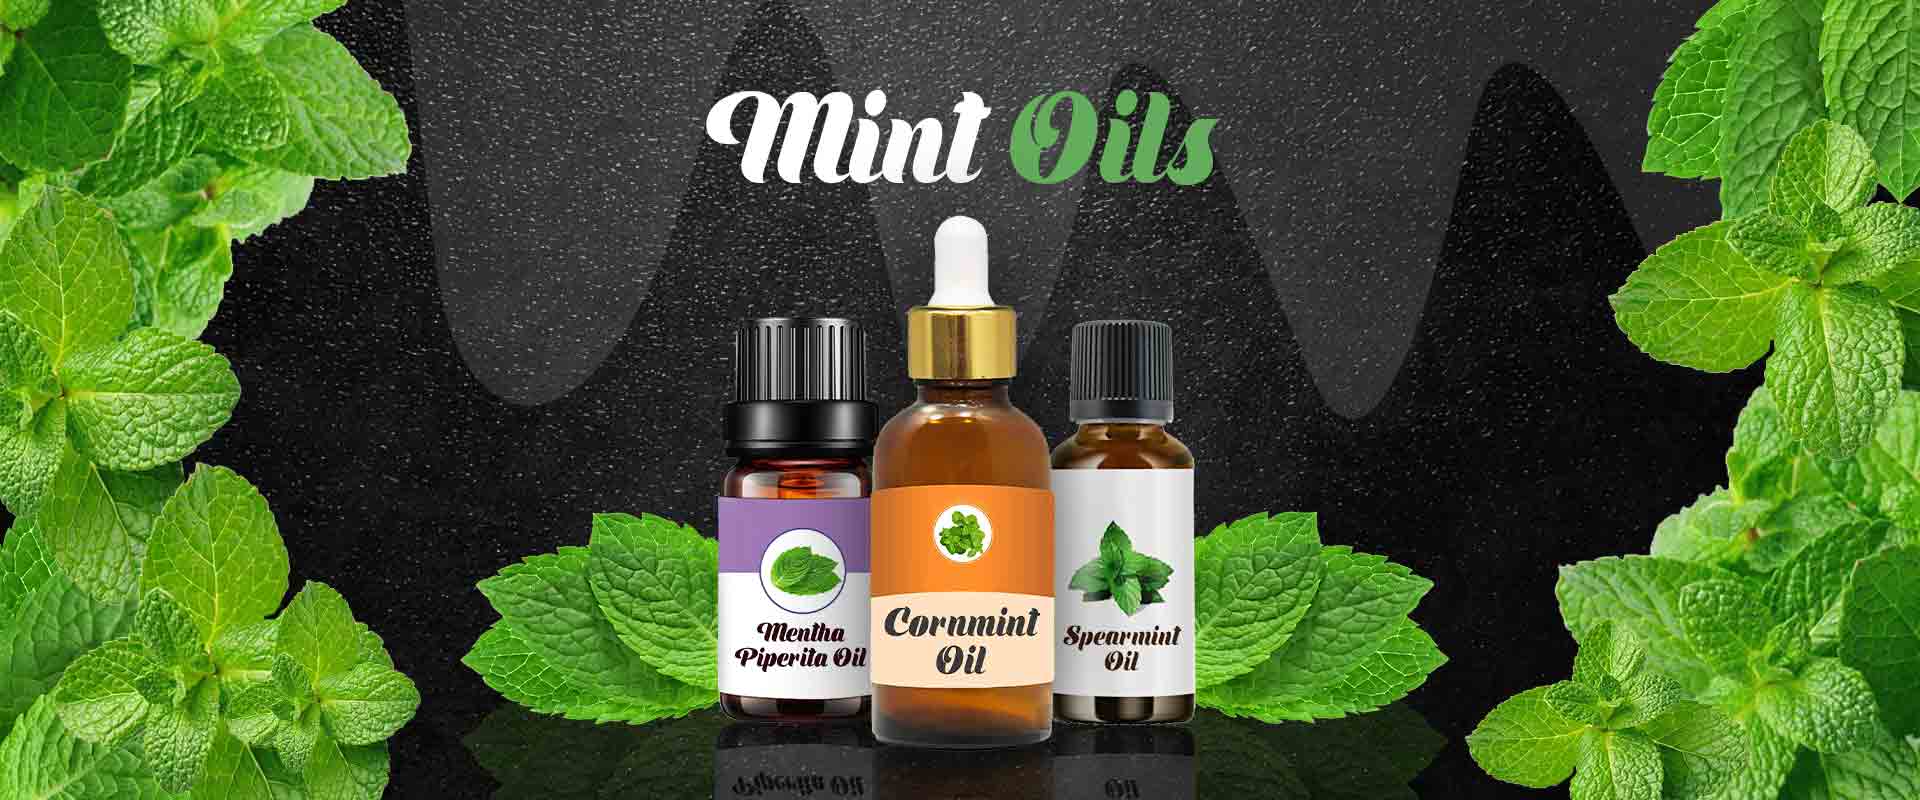 Mint Oils Manufacturers